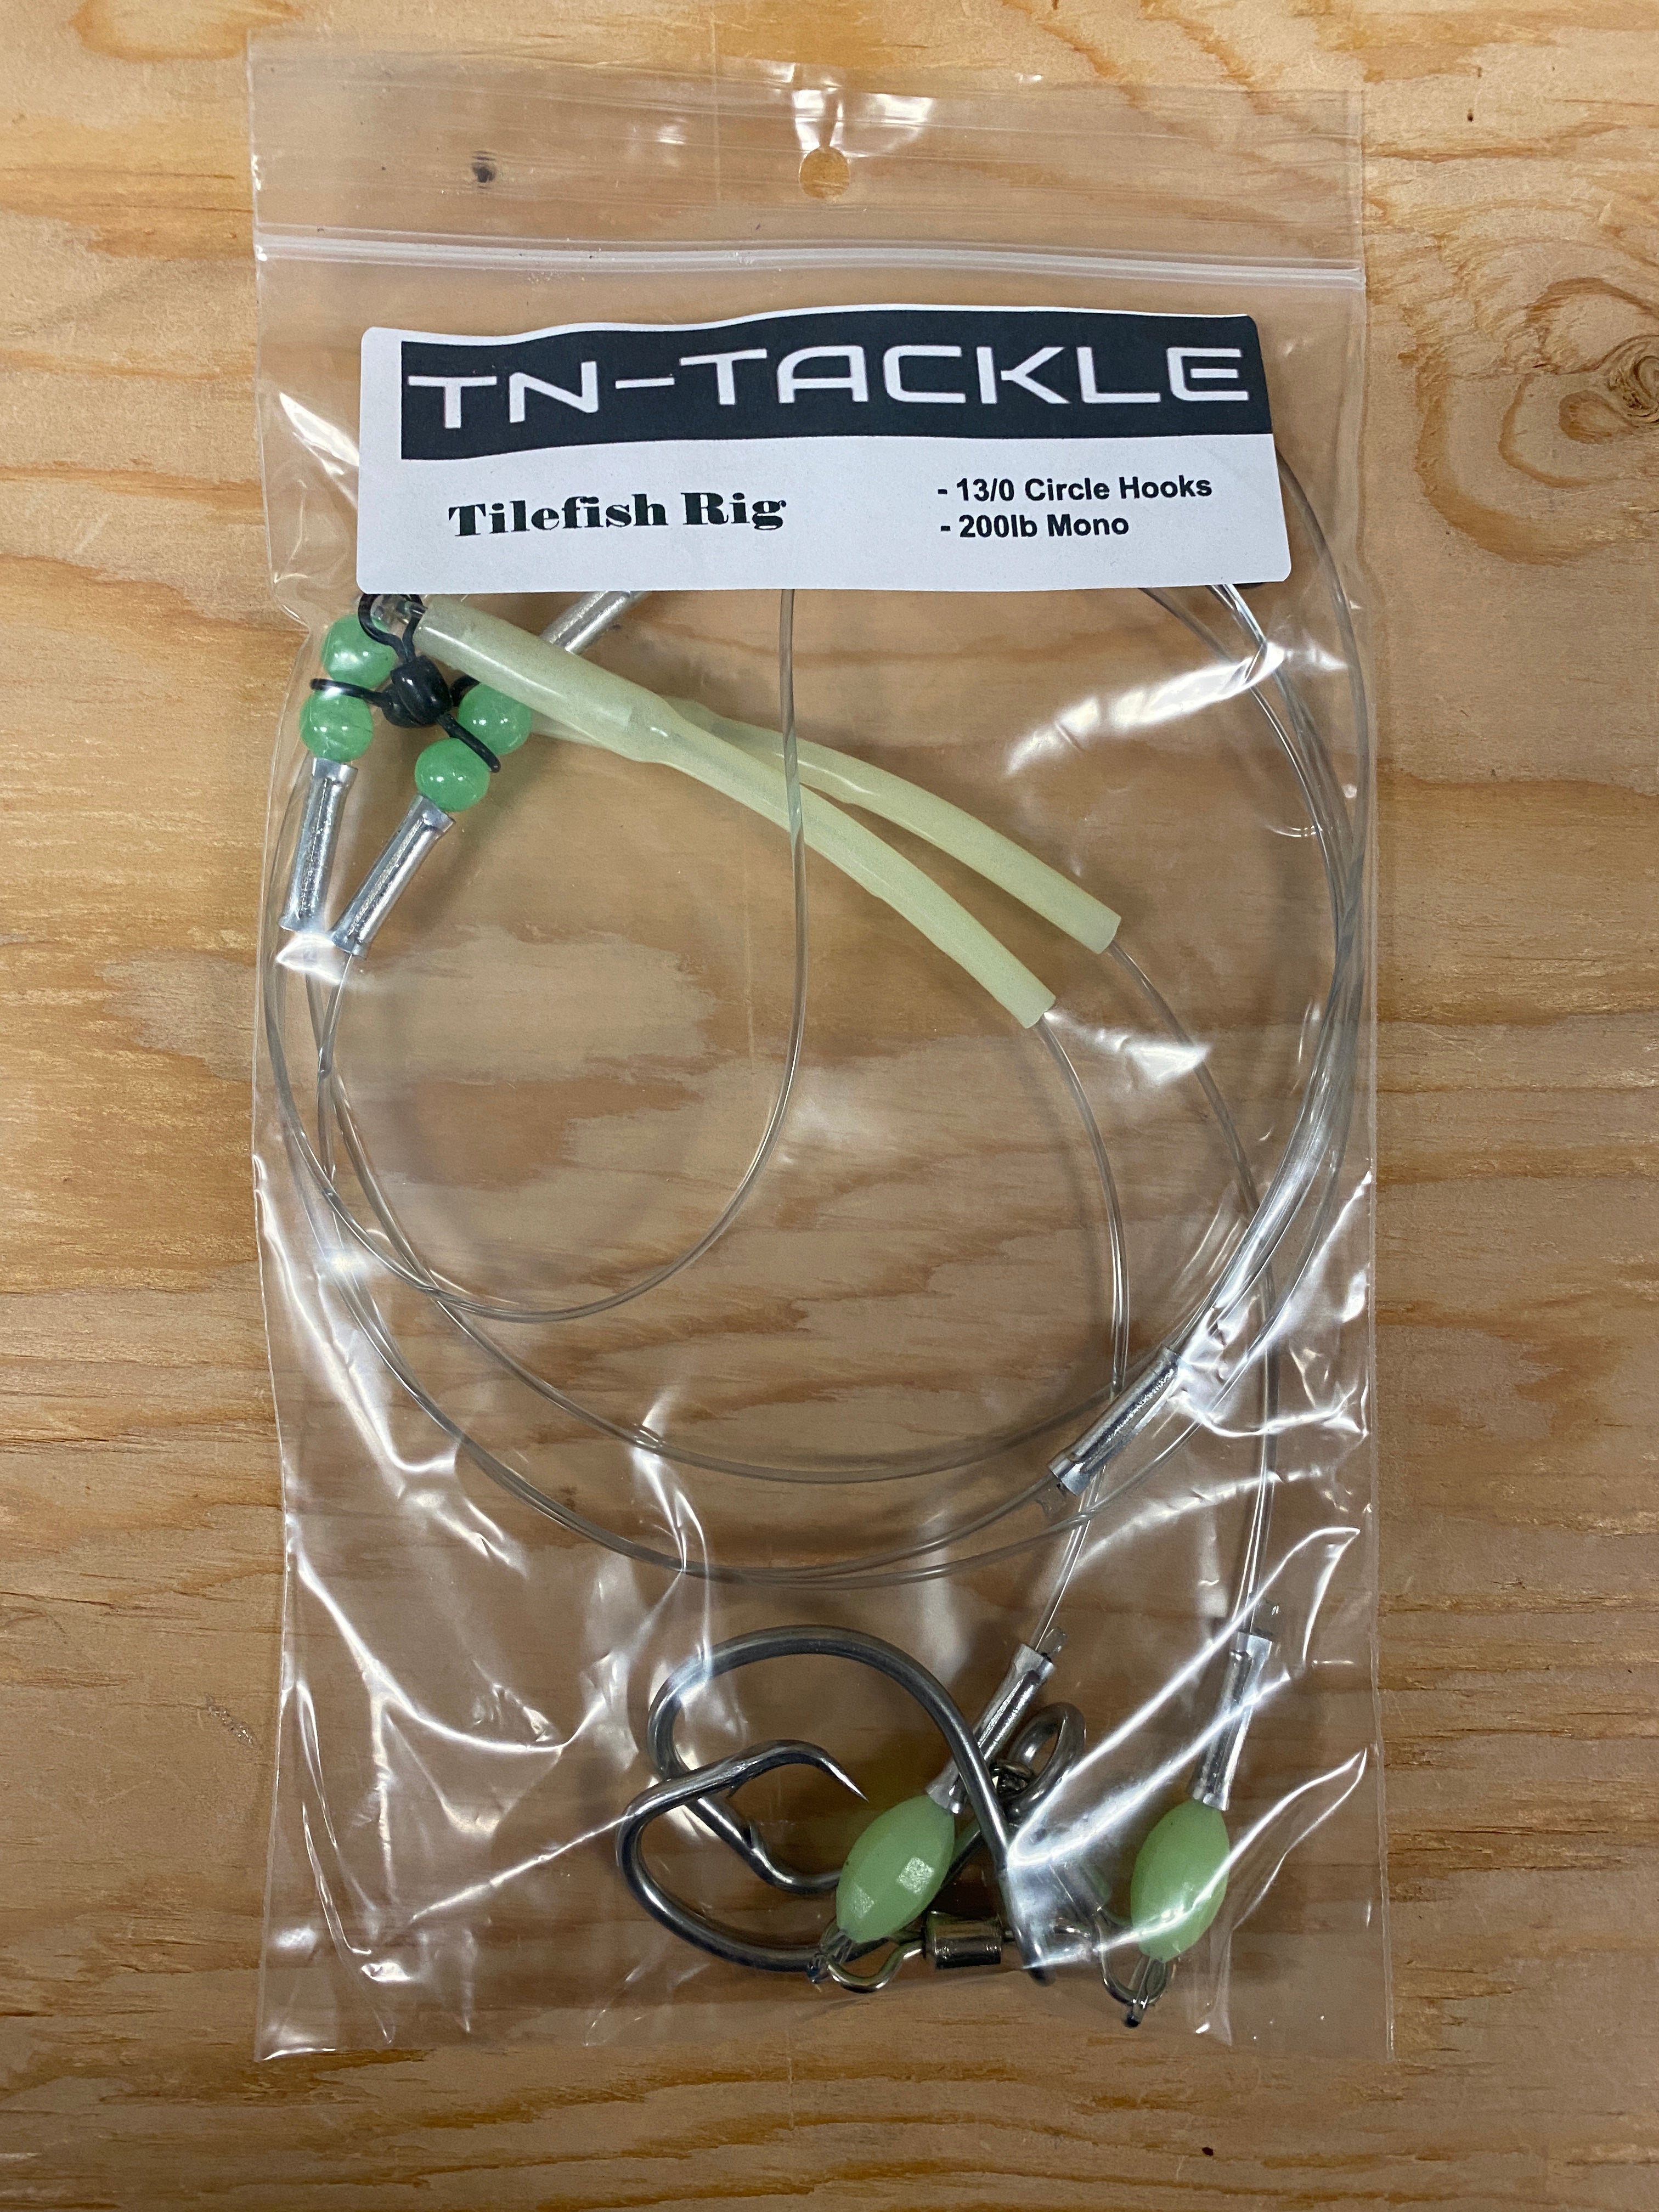 TN-Tackle - Tilefish Rigs